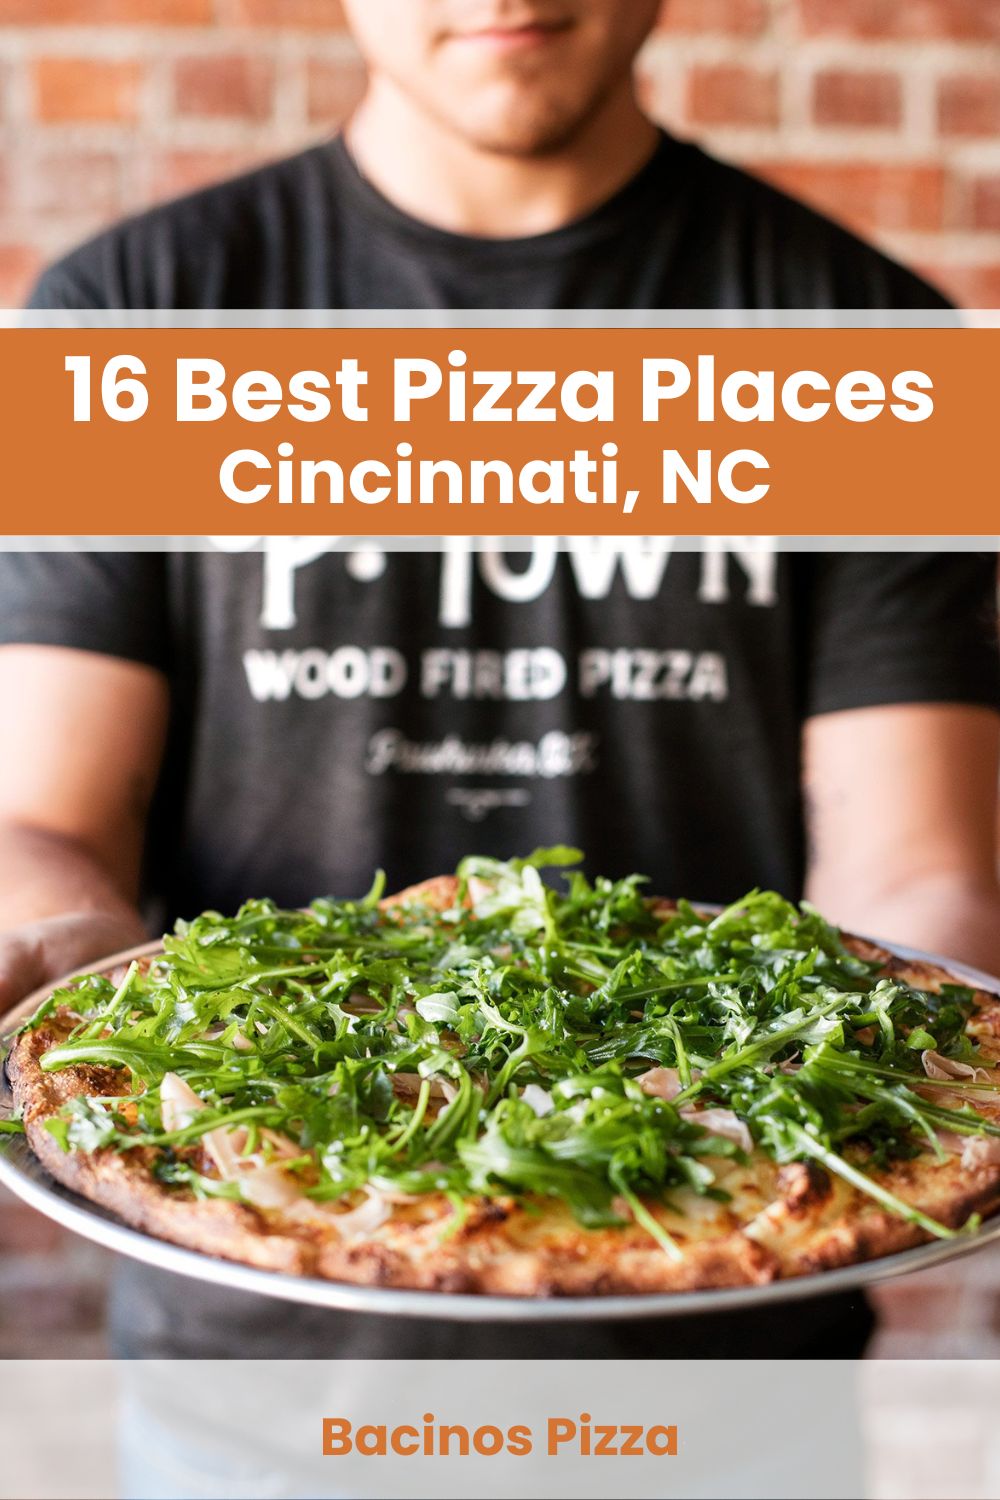 Best Pizza Places in Cincinnati